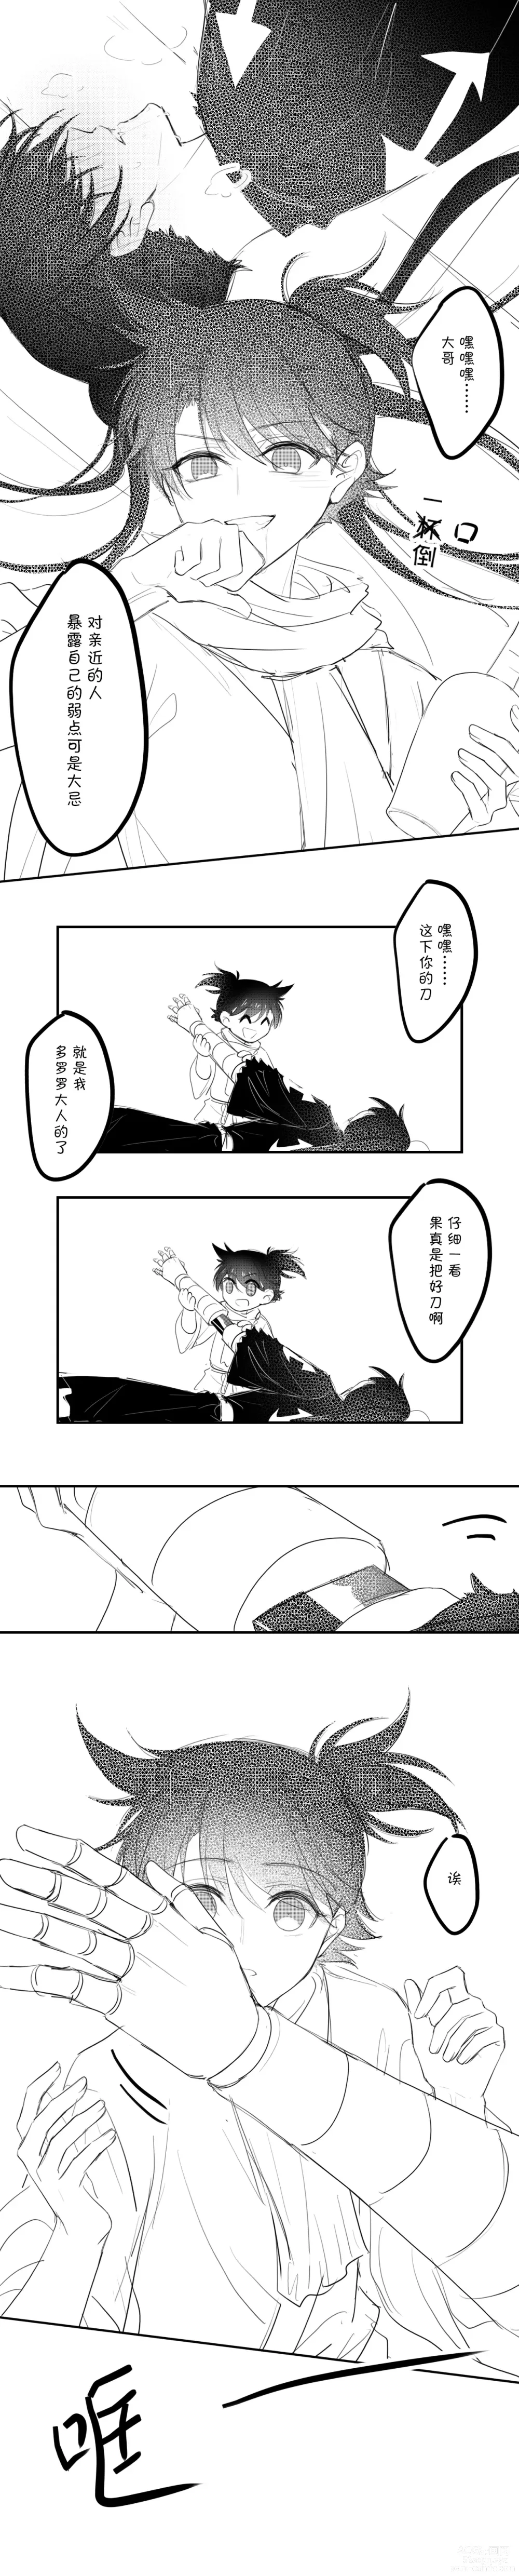 Page 8 of doujinshi -------------